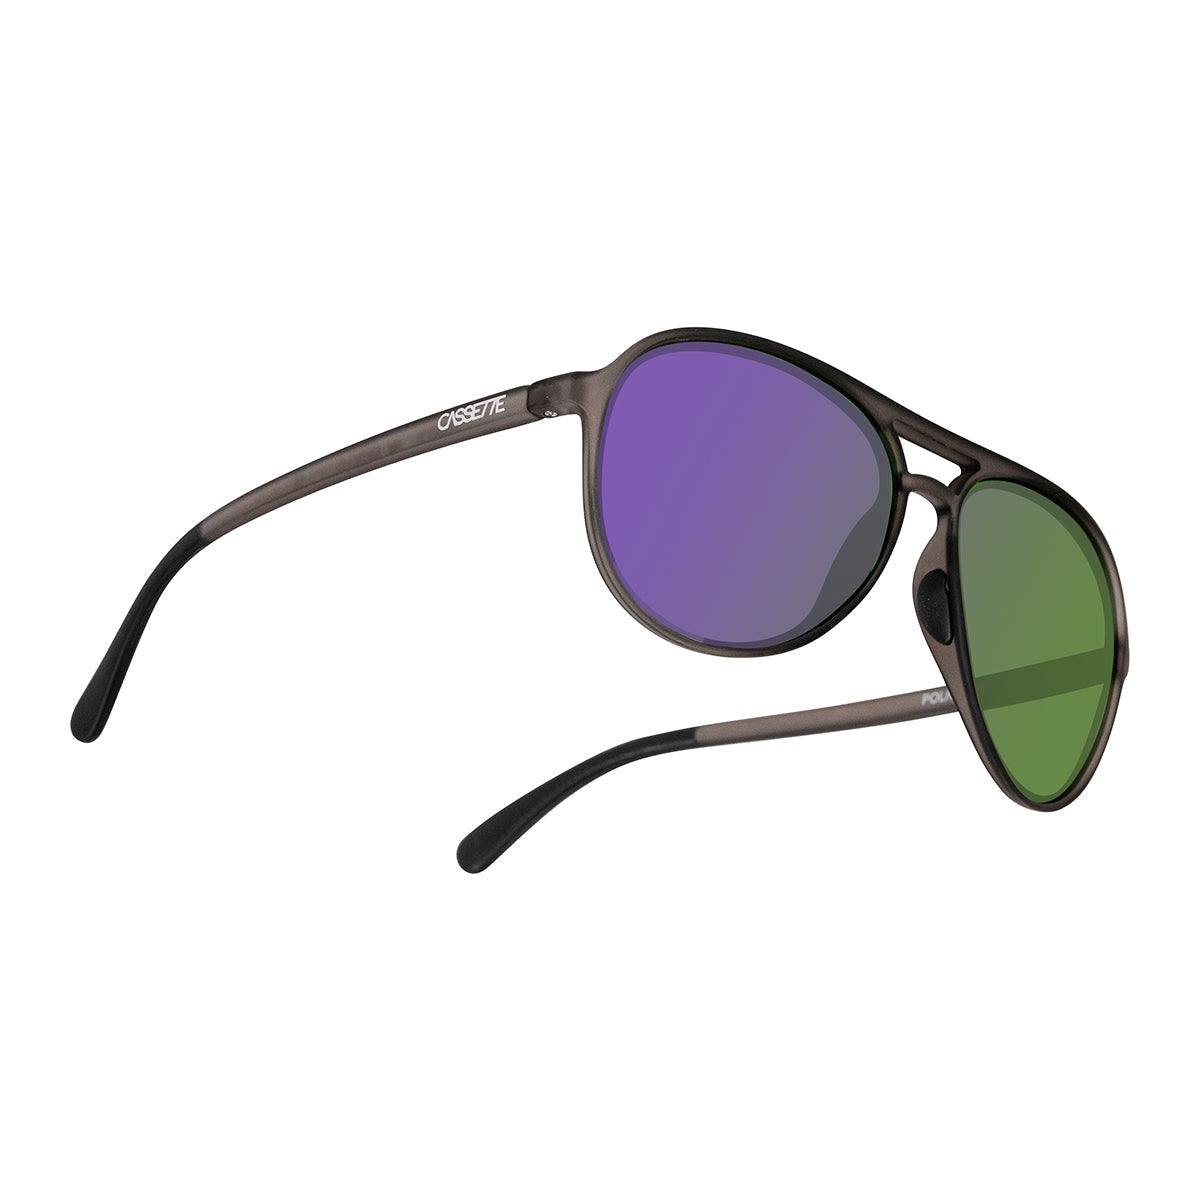 Arctic Fame Round Sunglasses - Polarized Purple Lens & Clear Frame